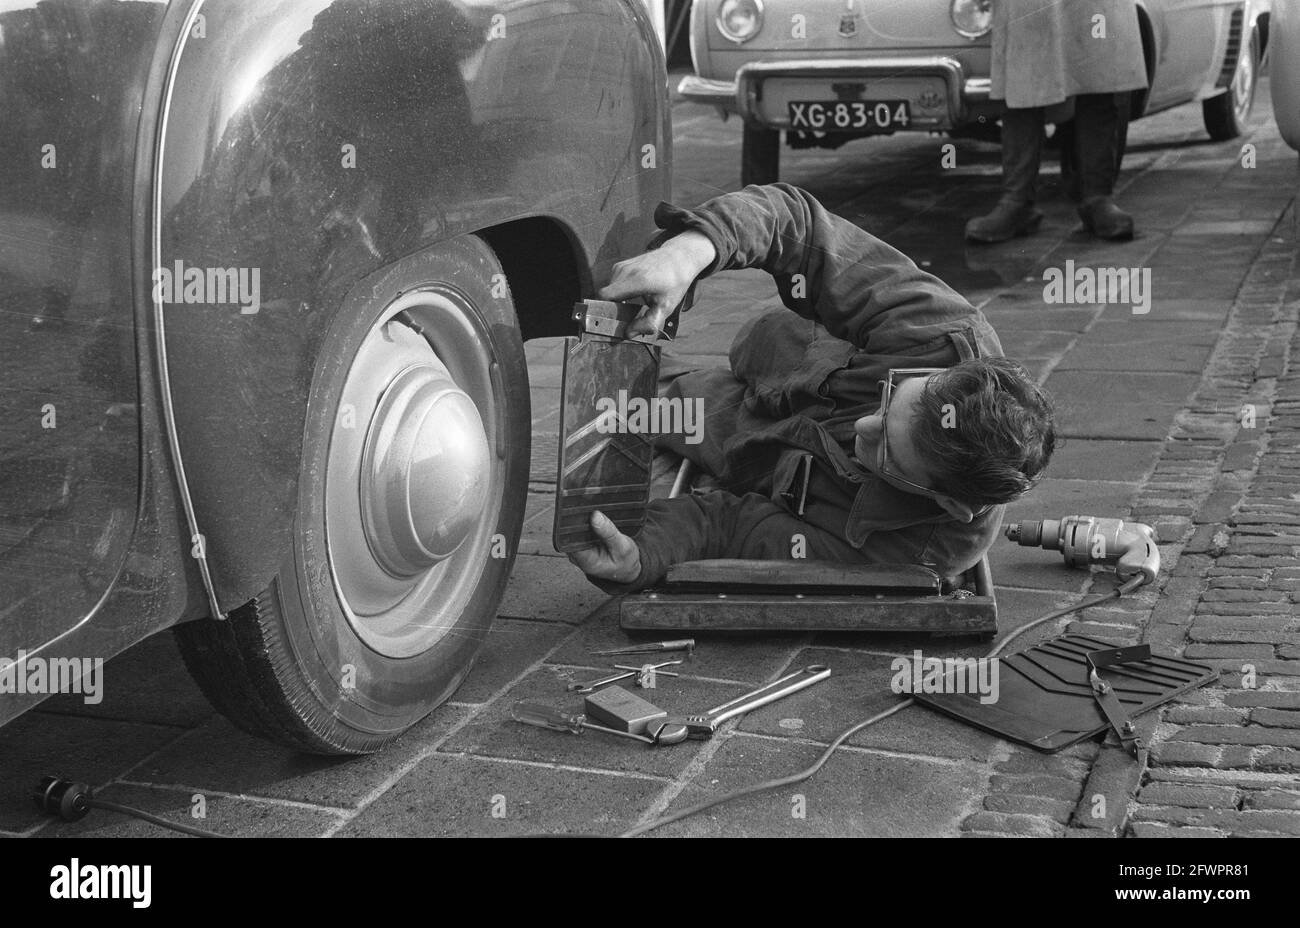 installation-of-mud-flaps-on-autos-december-21-1959-spatl.jpg